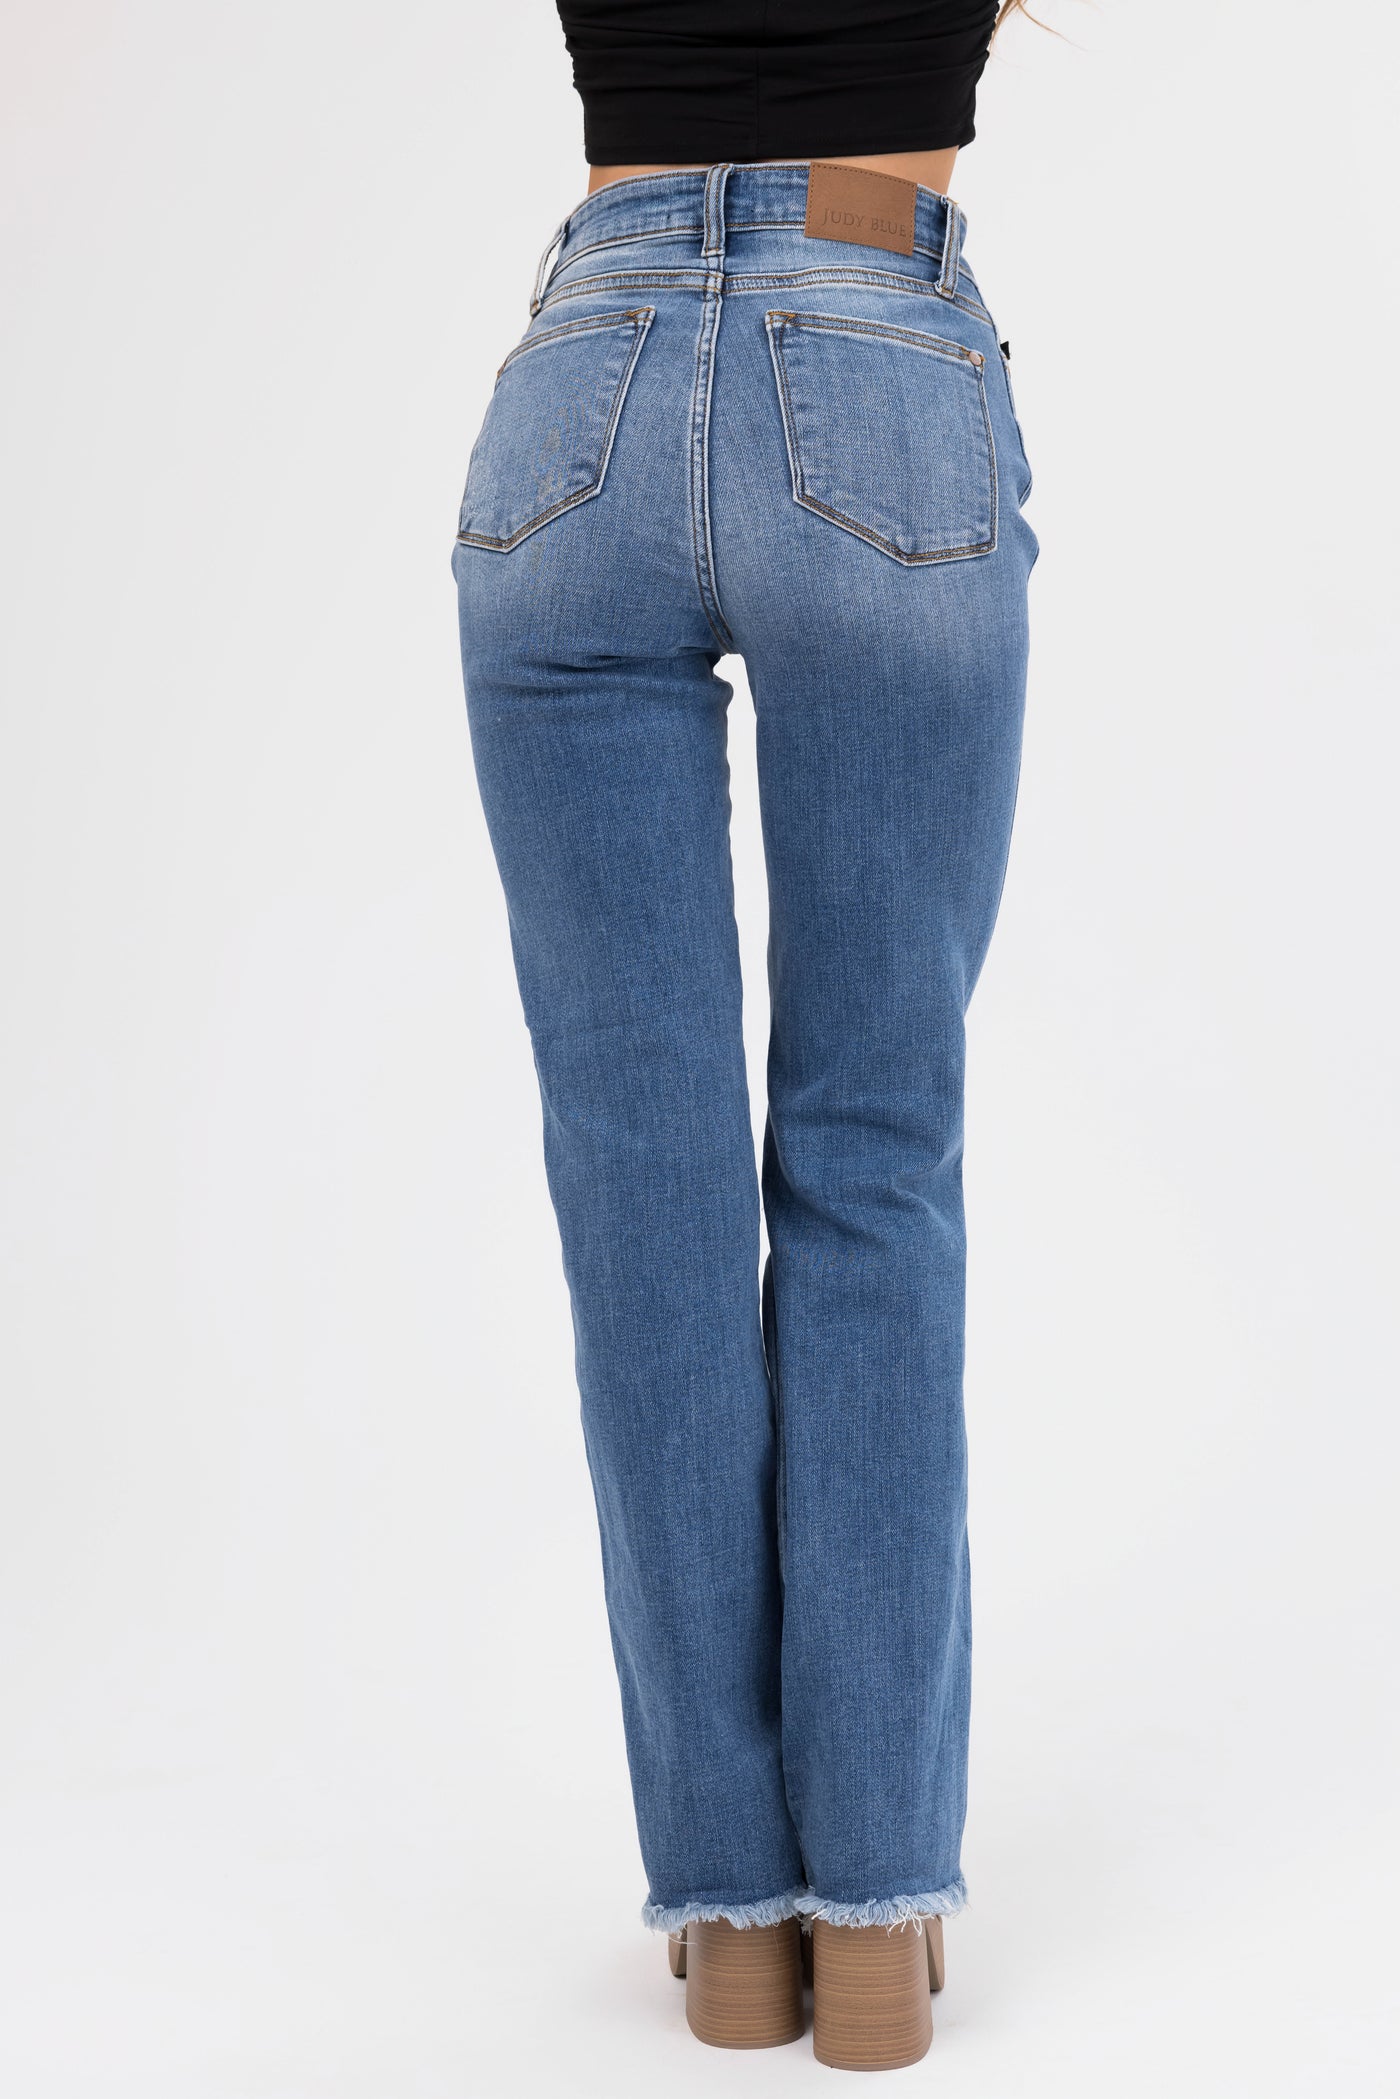 Judy Blue Medium Wash Distressed Flare Jeans